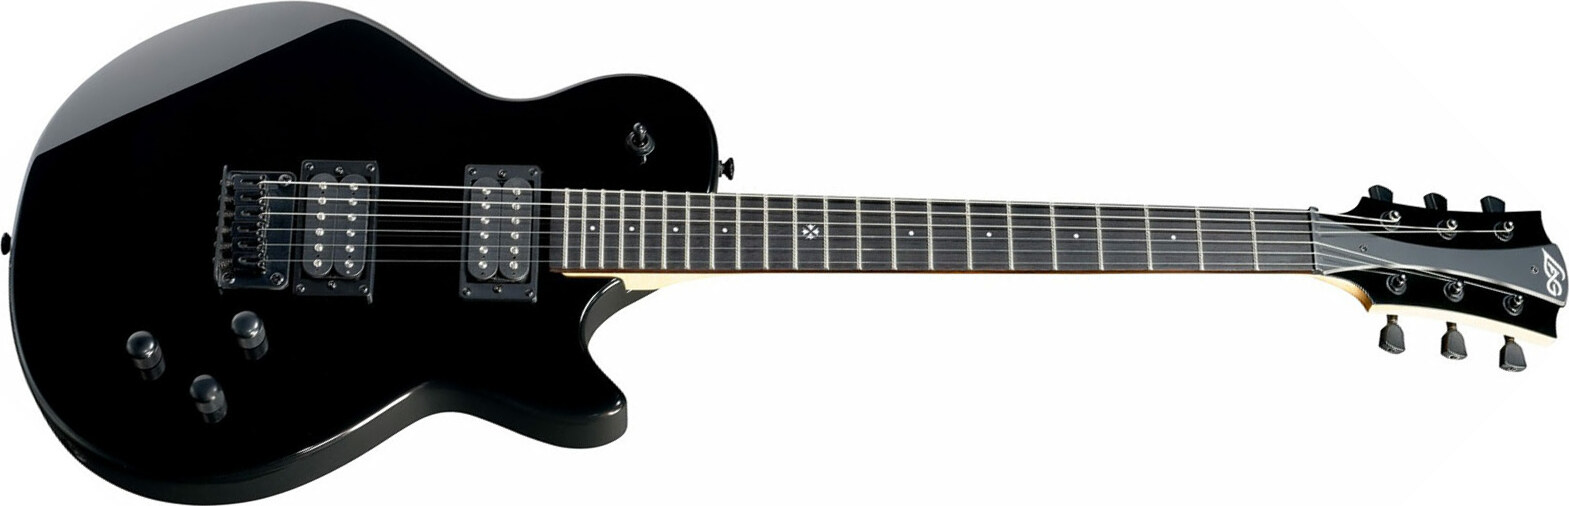 Lag Imperator 60 Hh Ht Rw - Black - Single cut electric guitar - Main picture